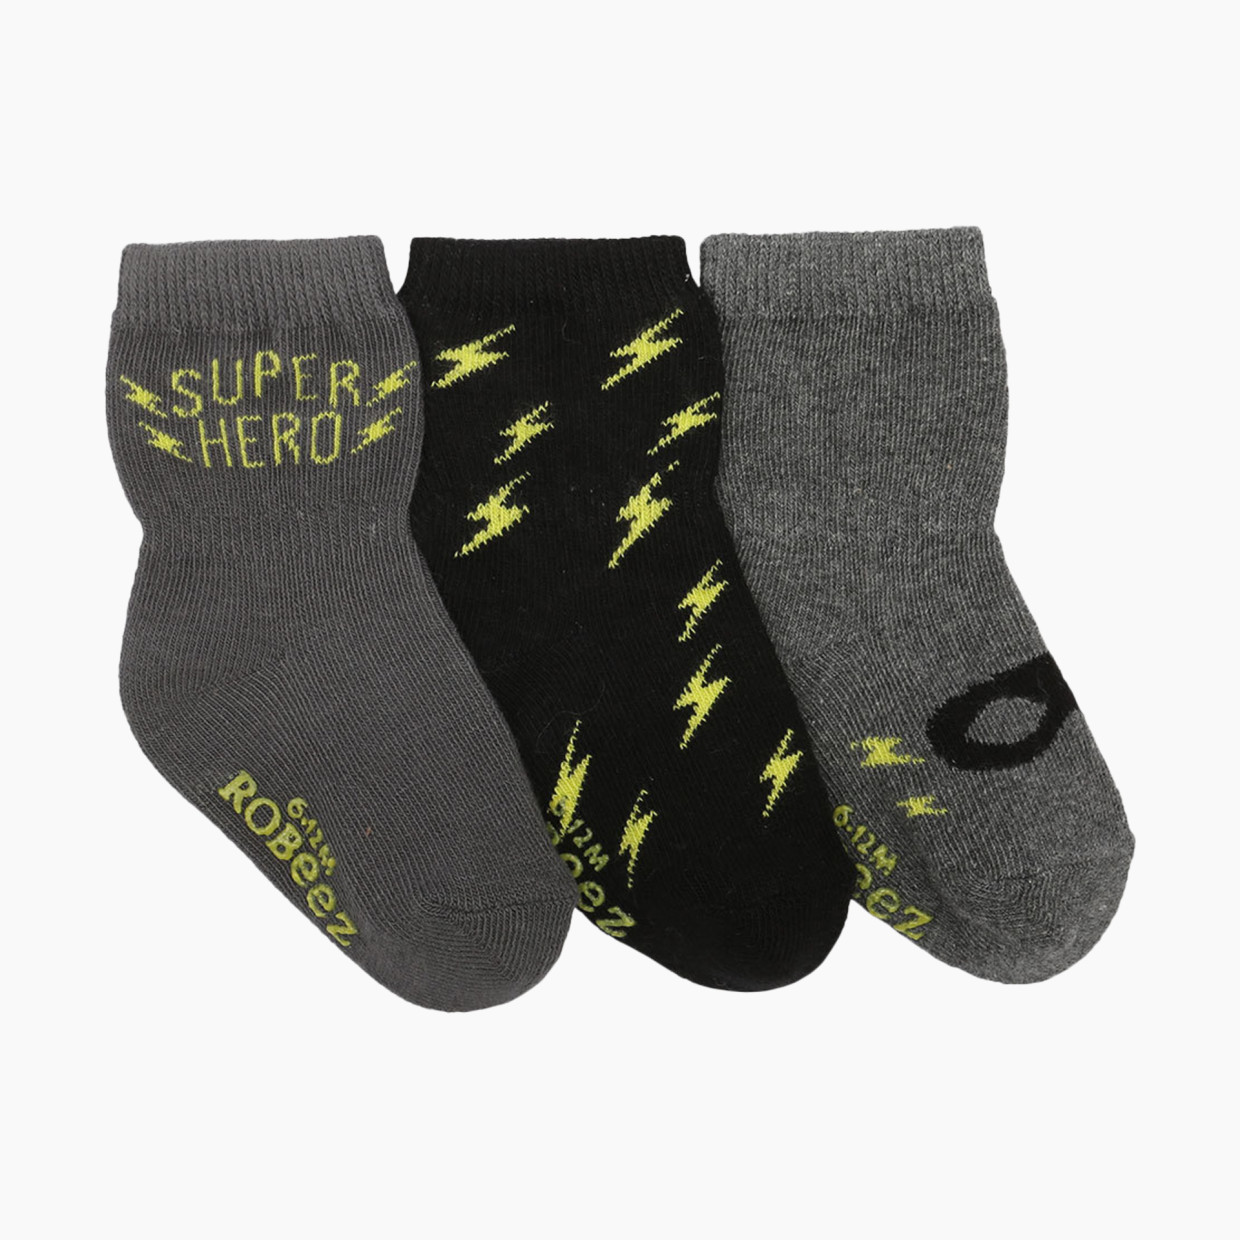 Robeez Socks (3 Pack) - Super Hero, 0-6 Months.